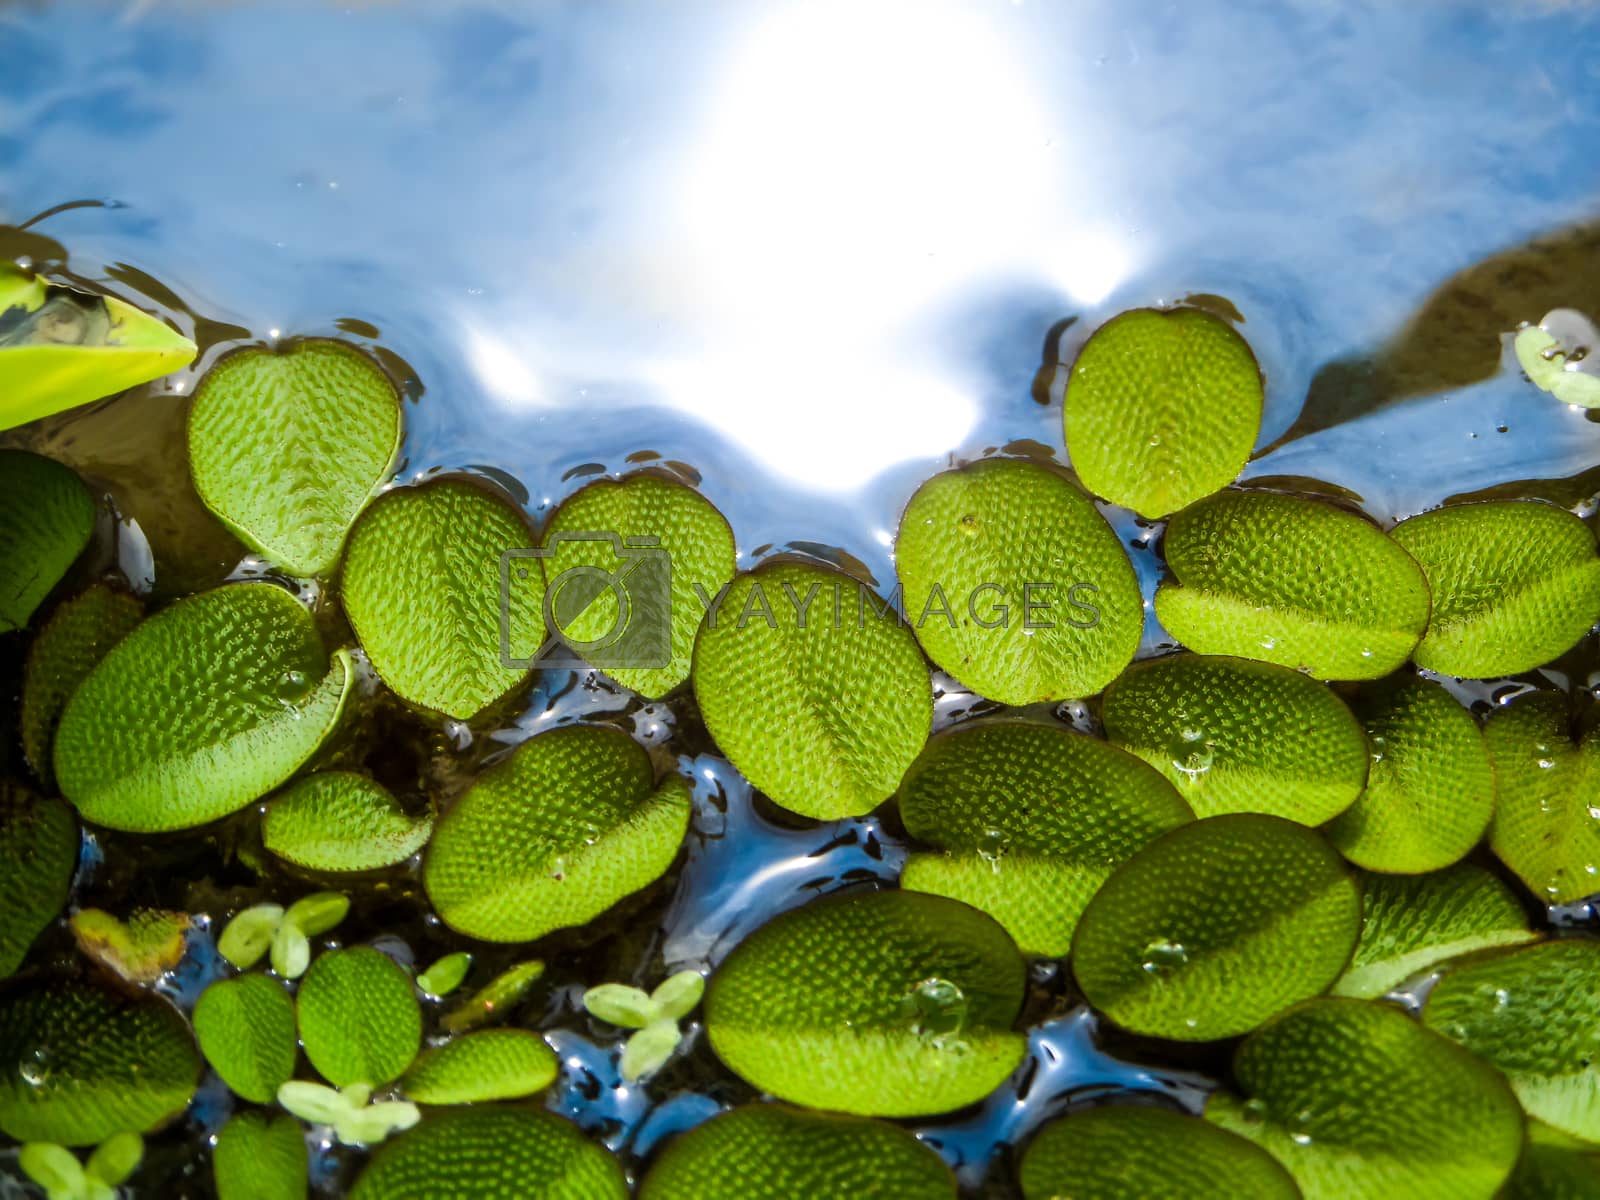 Royalty free image of little leaves of water fern floating on water by Darkfox